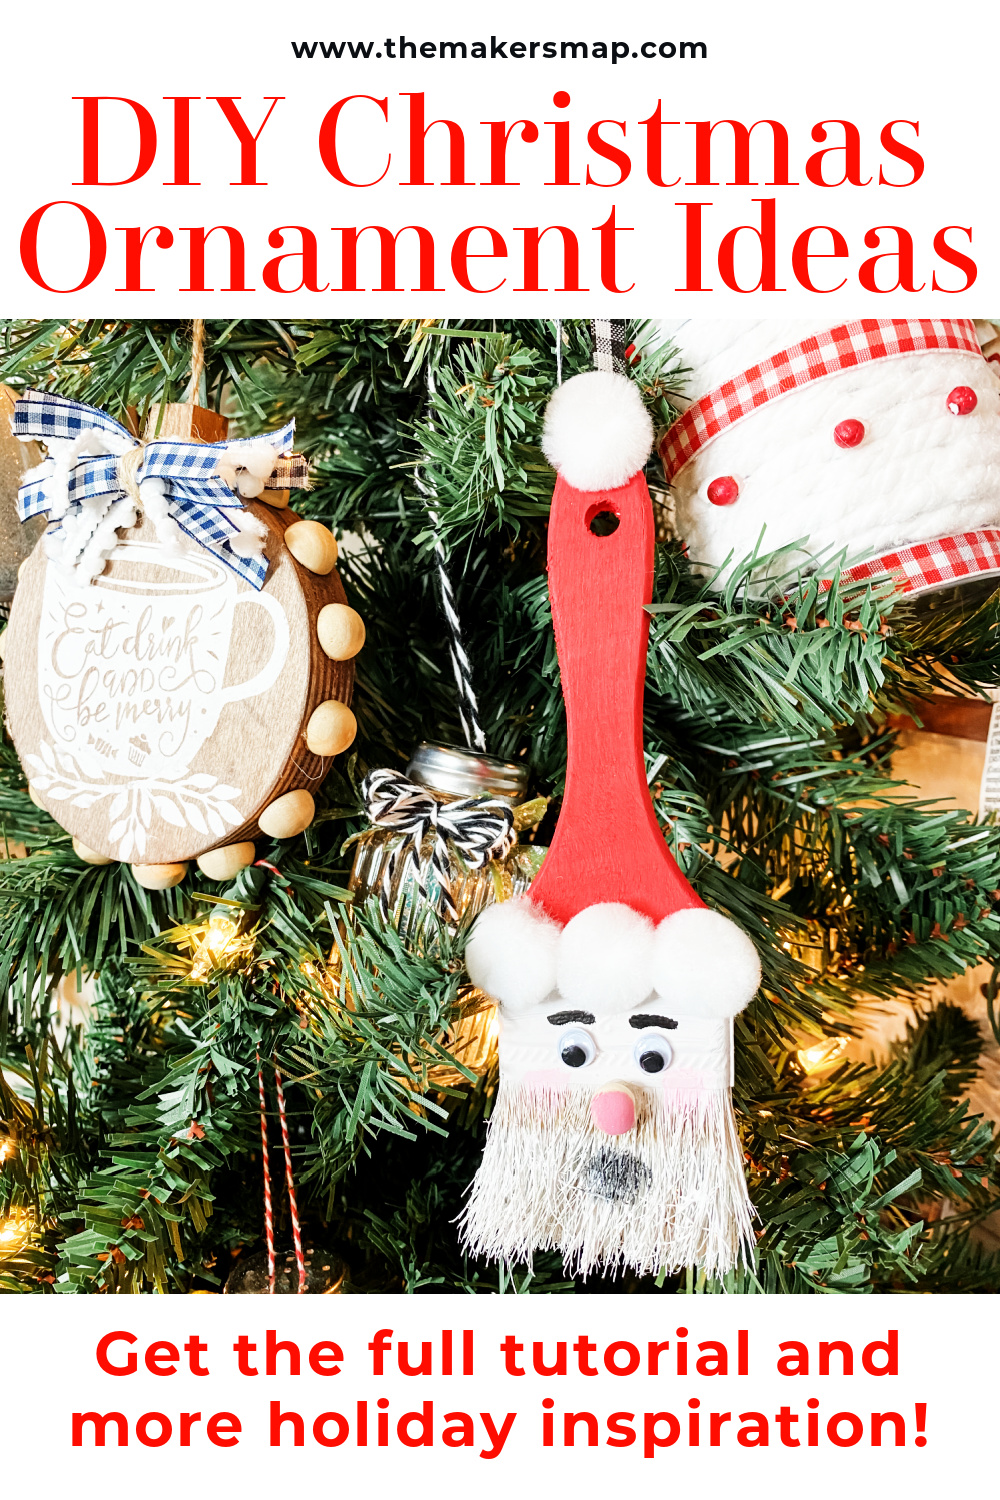 3 DIY Christmas Tree Ornaments